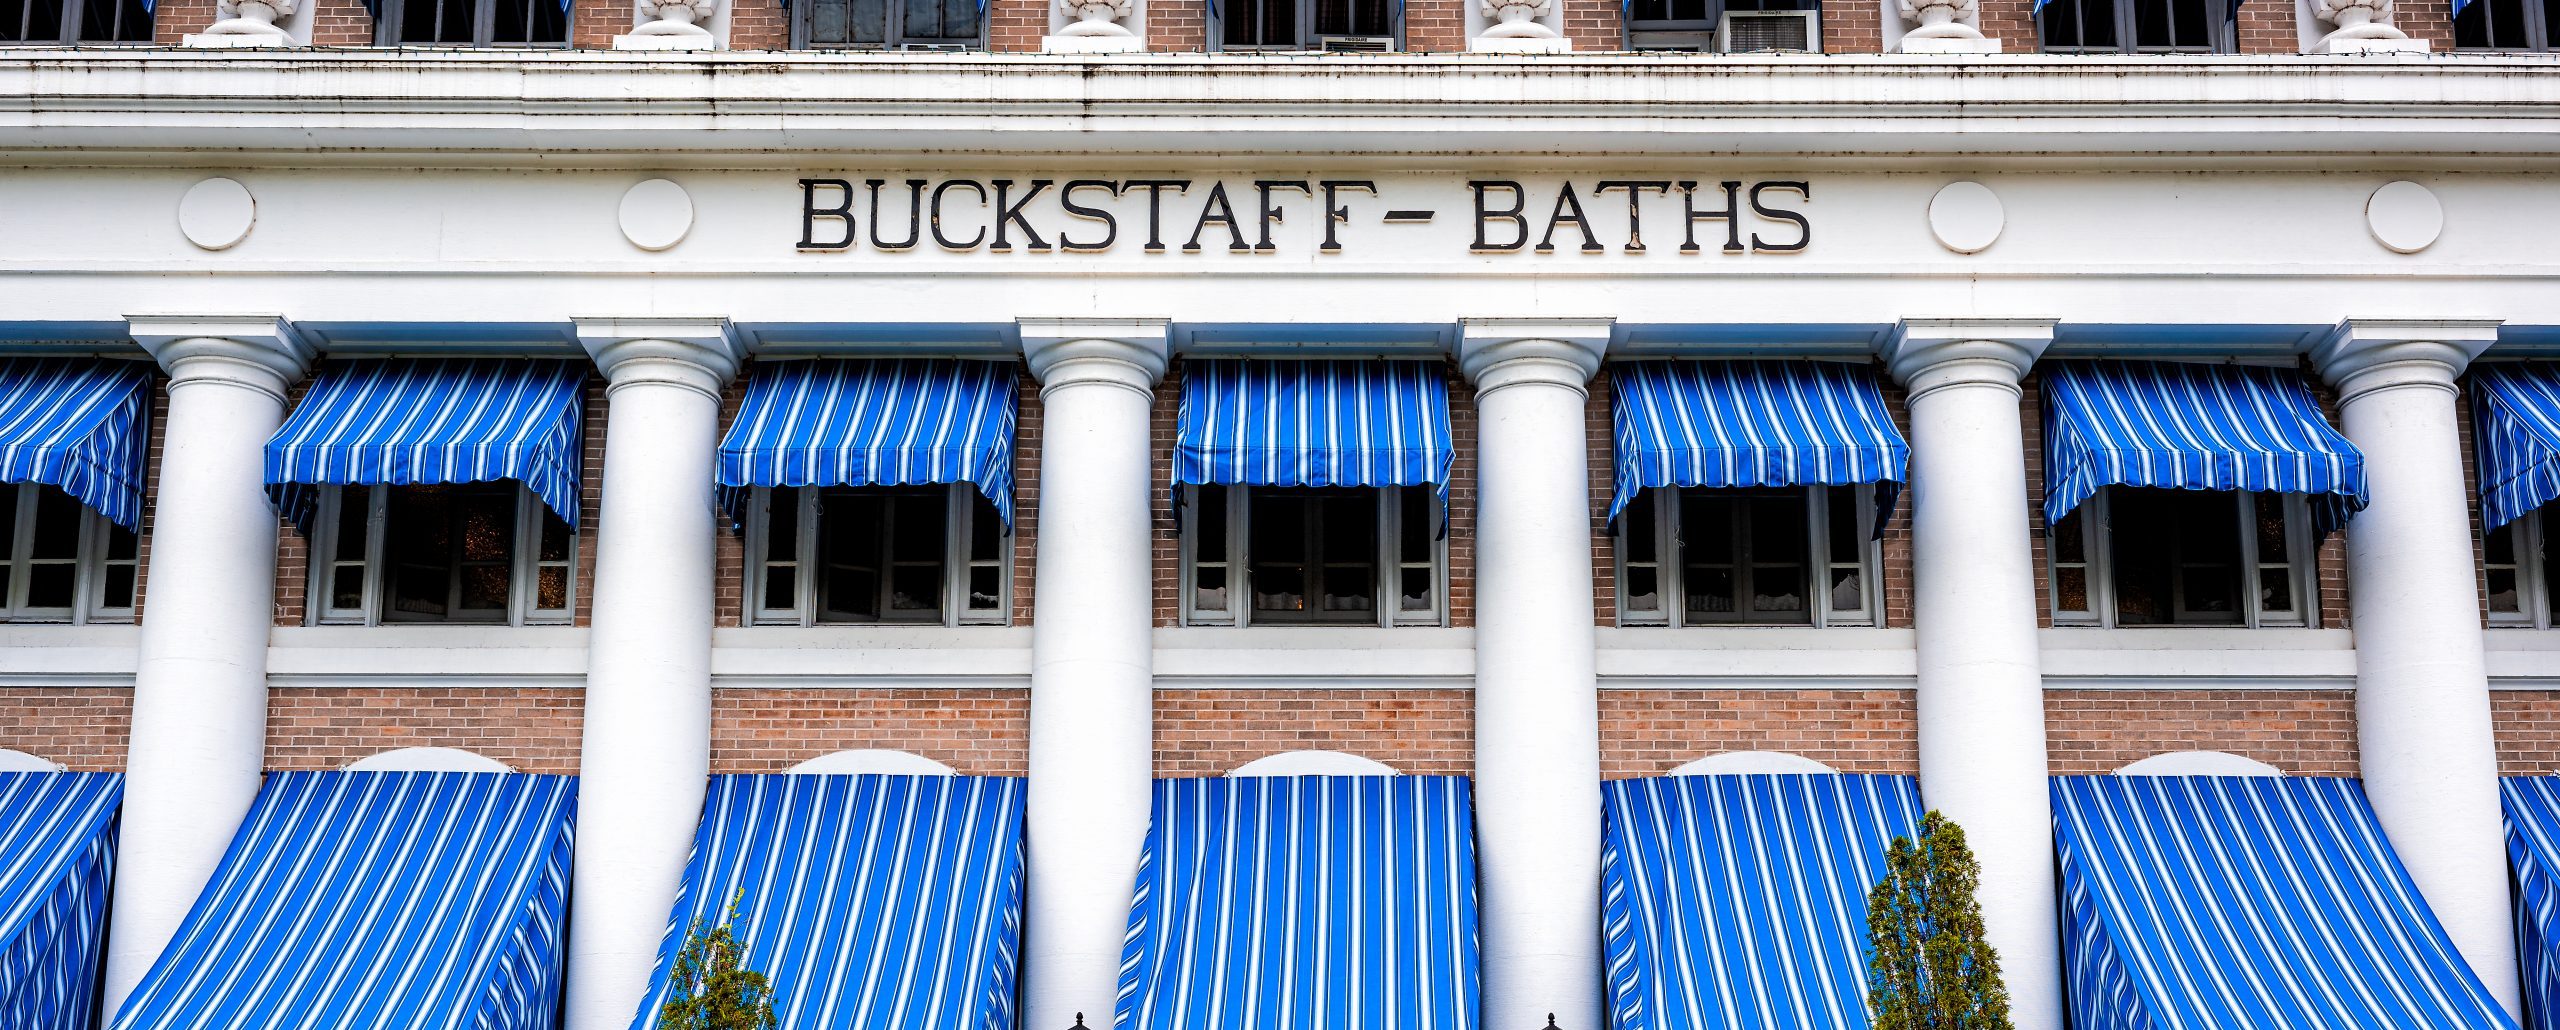 Buckstaff Bathhouse in Hot Springs, Arkansas